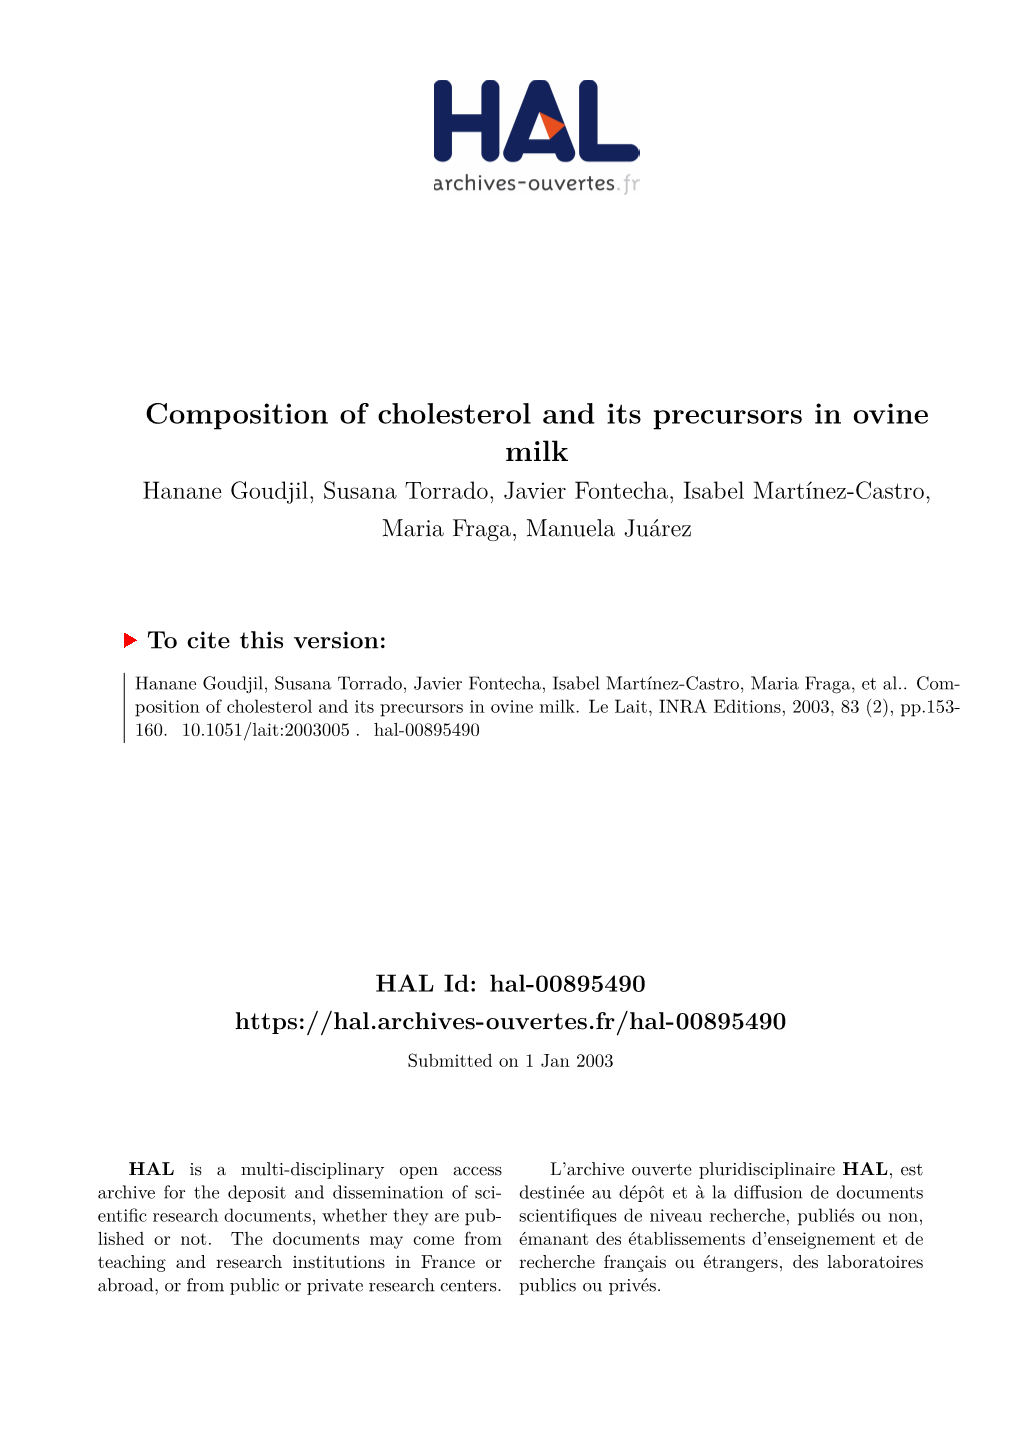 Composition of Cholesterol and Its Precursors in Ovine Milk Hanane Goudjil, Susana Torrado, Javier Fontecha, Isabel Martínez-Castro, Maria Fraga, Manuela Juárez